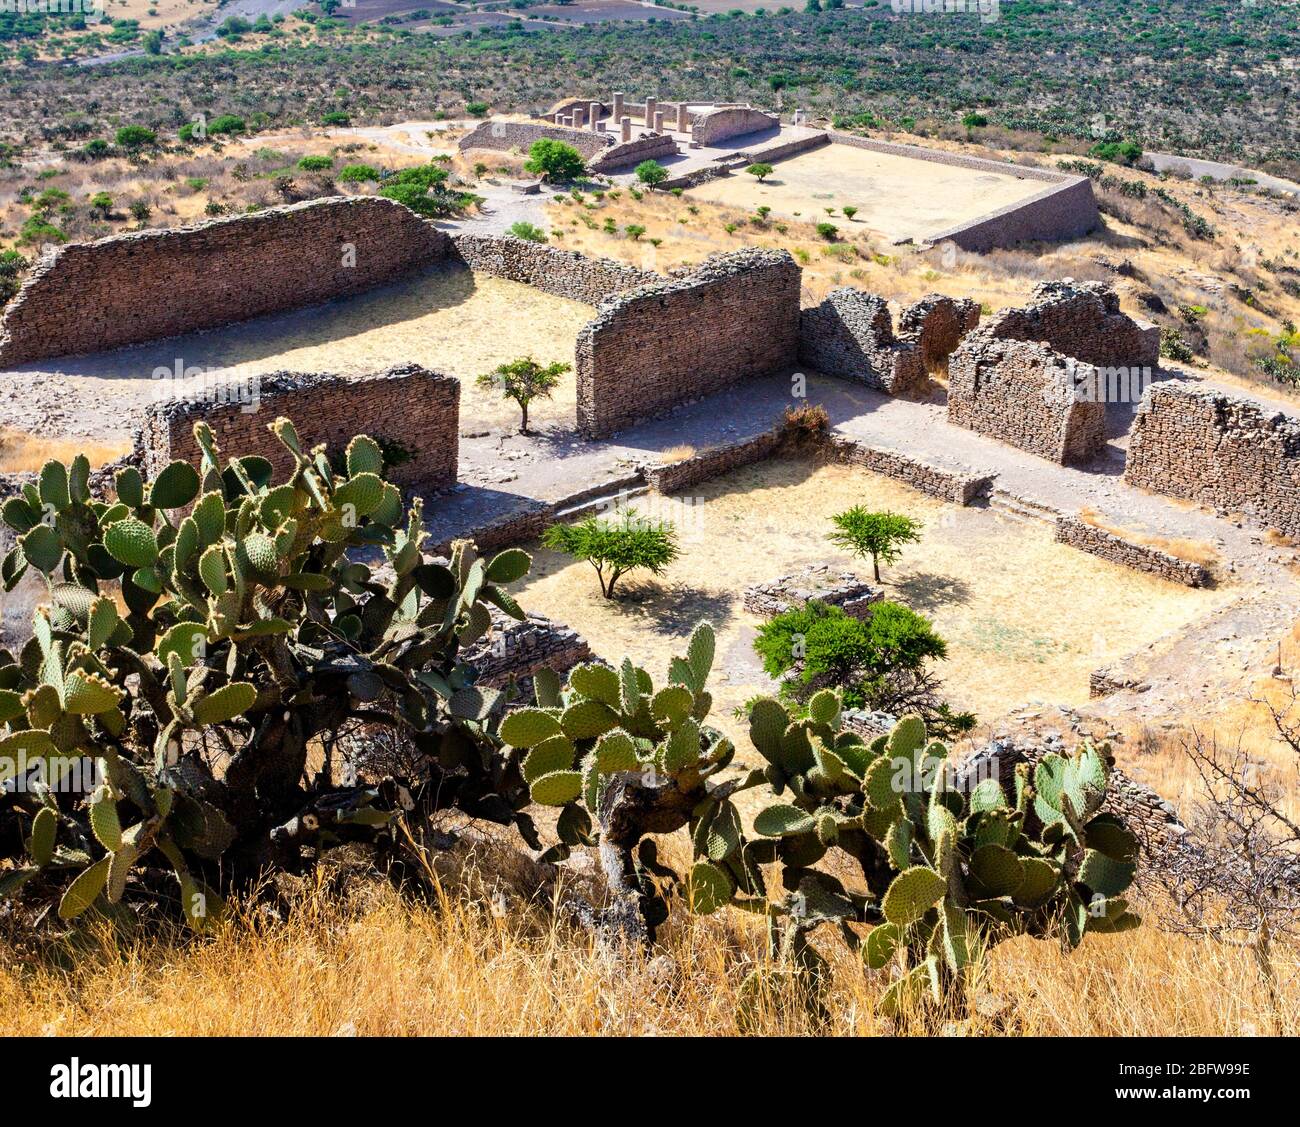 View of the Chicomoztoc ruins, also known as La Quemada, in Zacatecas, Mexico. Stock Photo